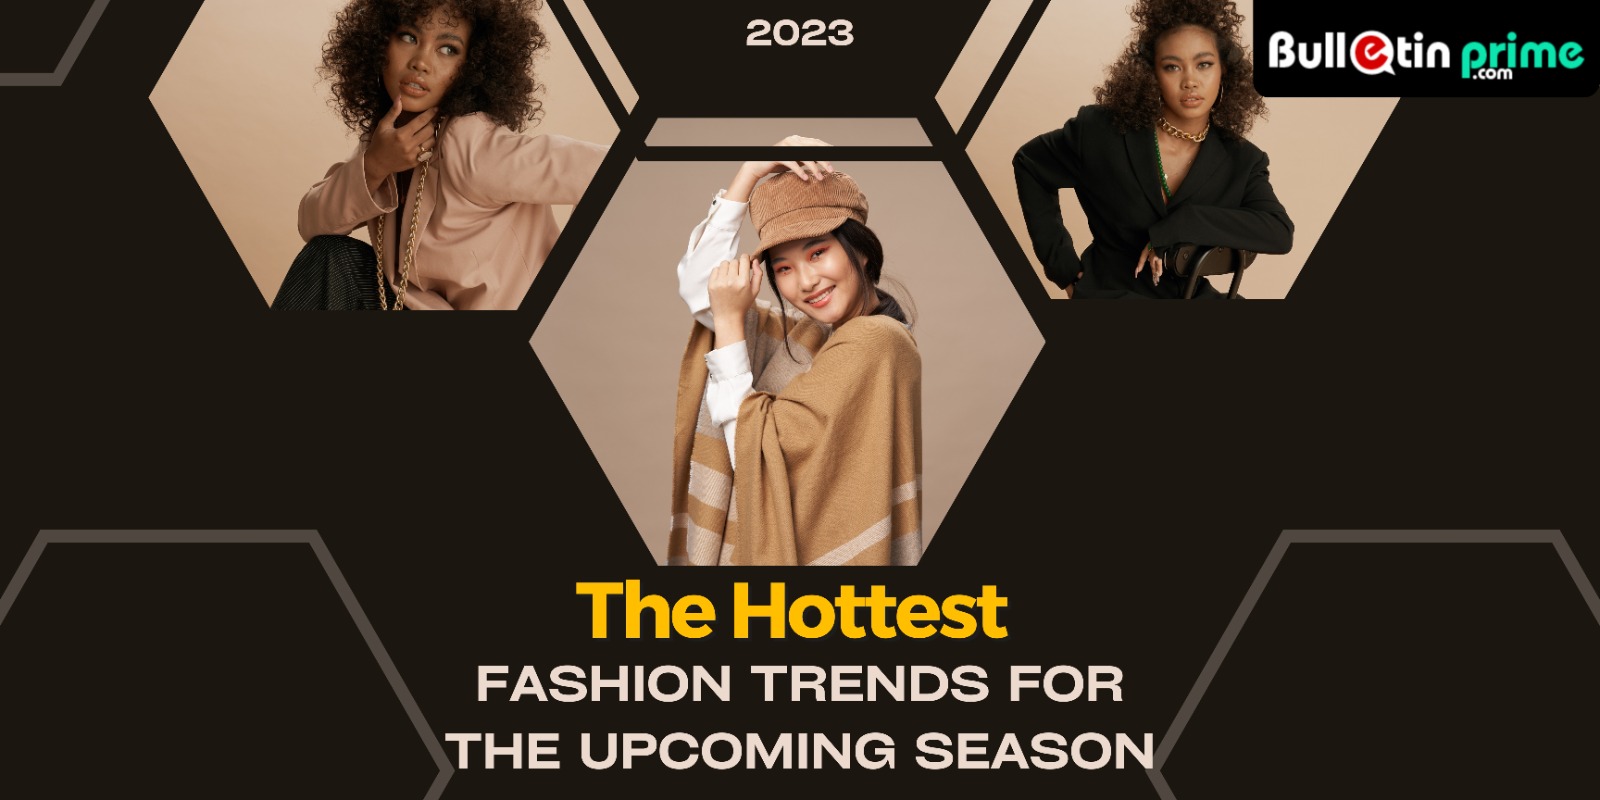 The Season's Most Popular Fashion Trends